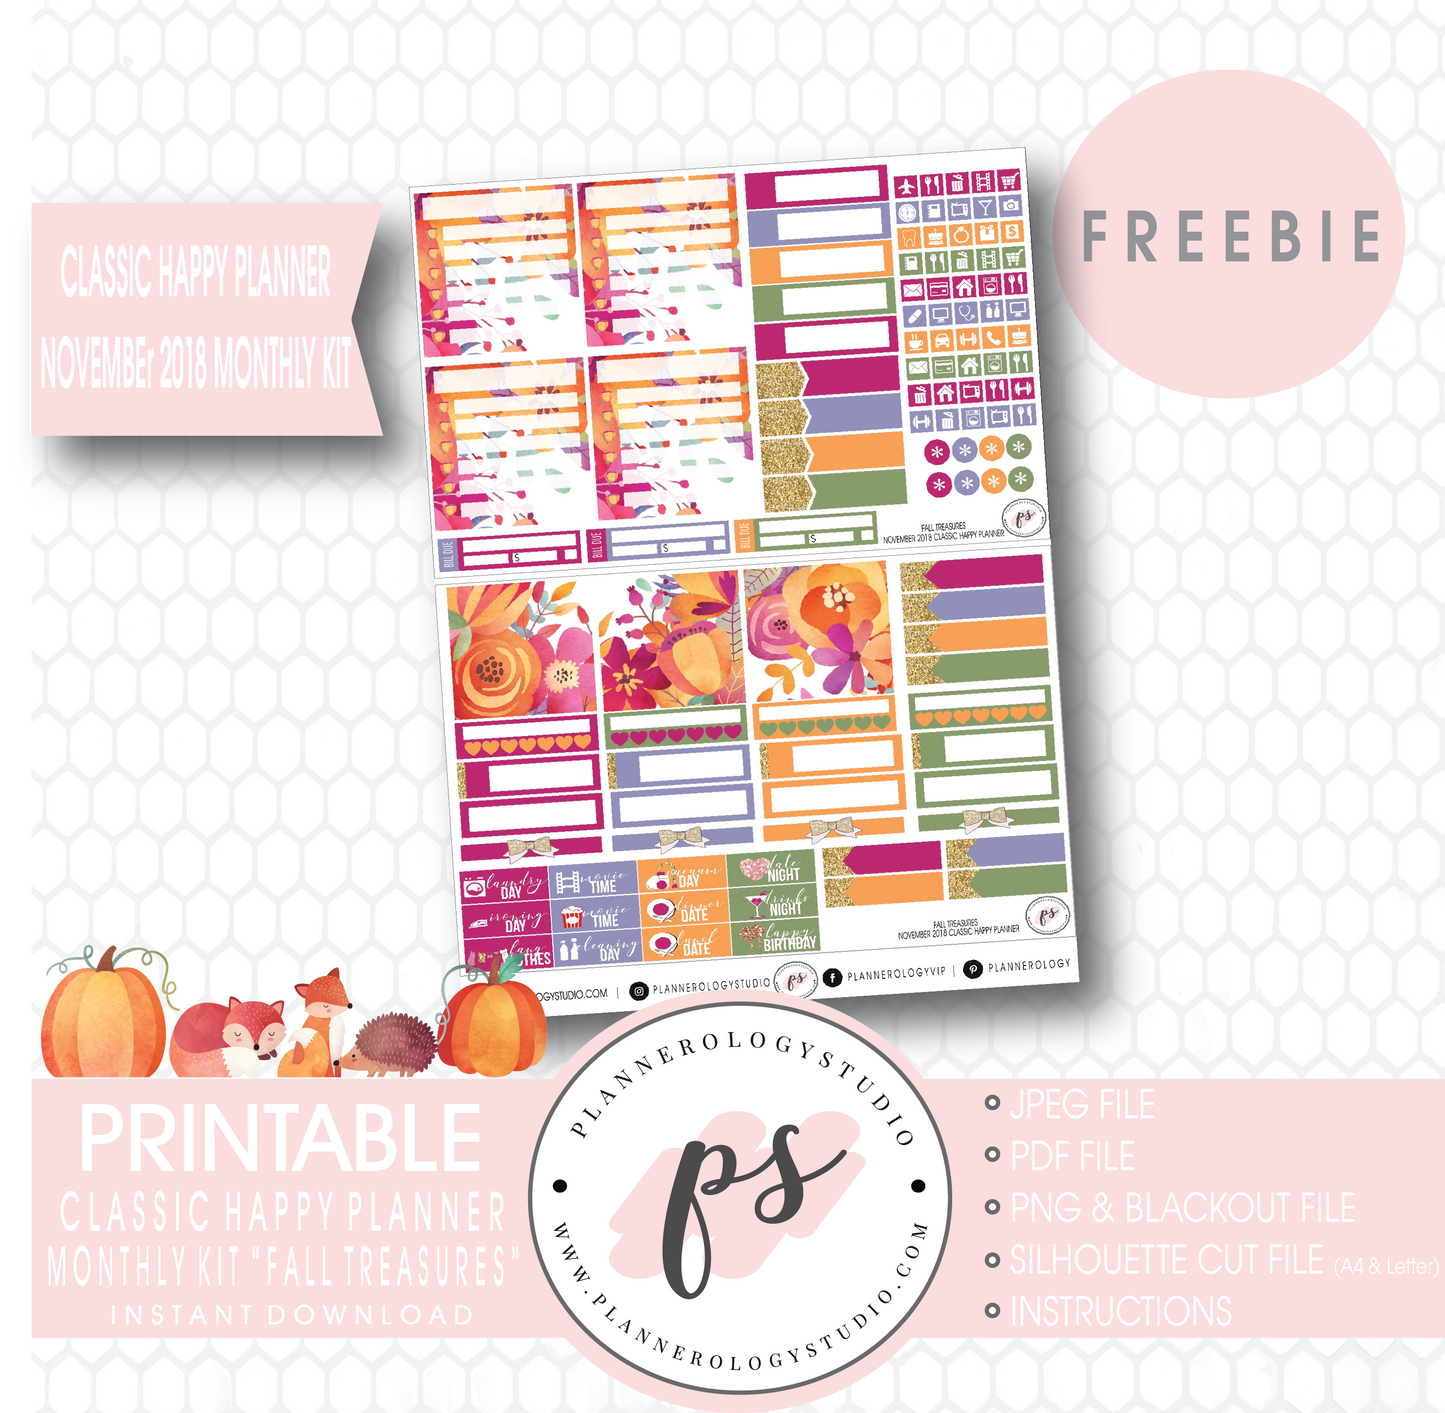 Fall Treasures Classic Happy Planner November 2018 Monthly Kit Digital Printable Planner Stickers (PDF/JPG/PNG/Silhouette Cut File Freebie) - Plannerologystudio